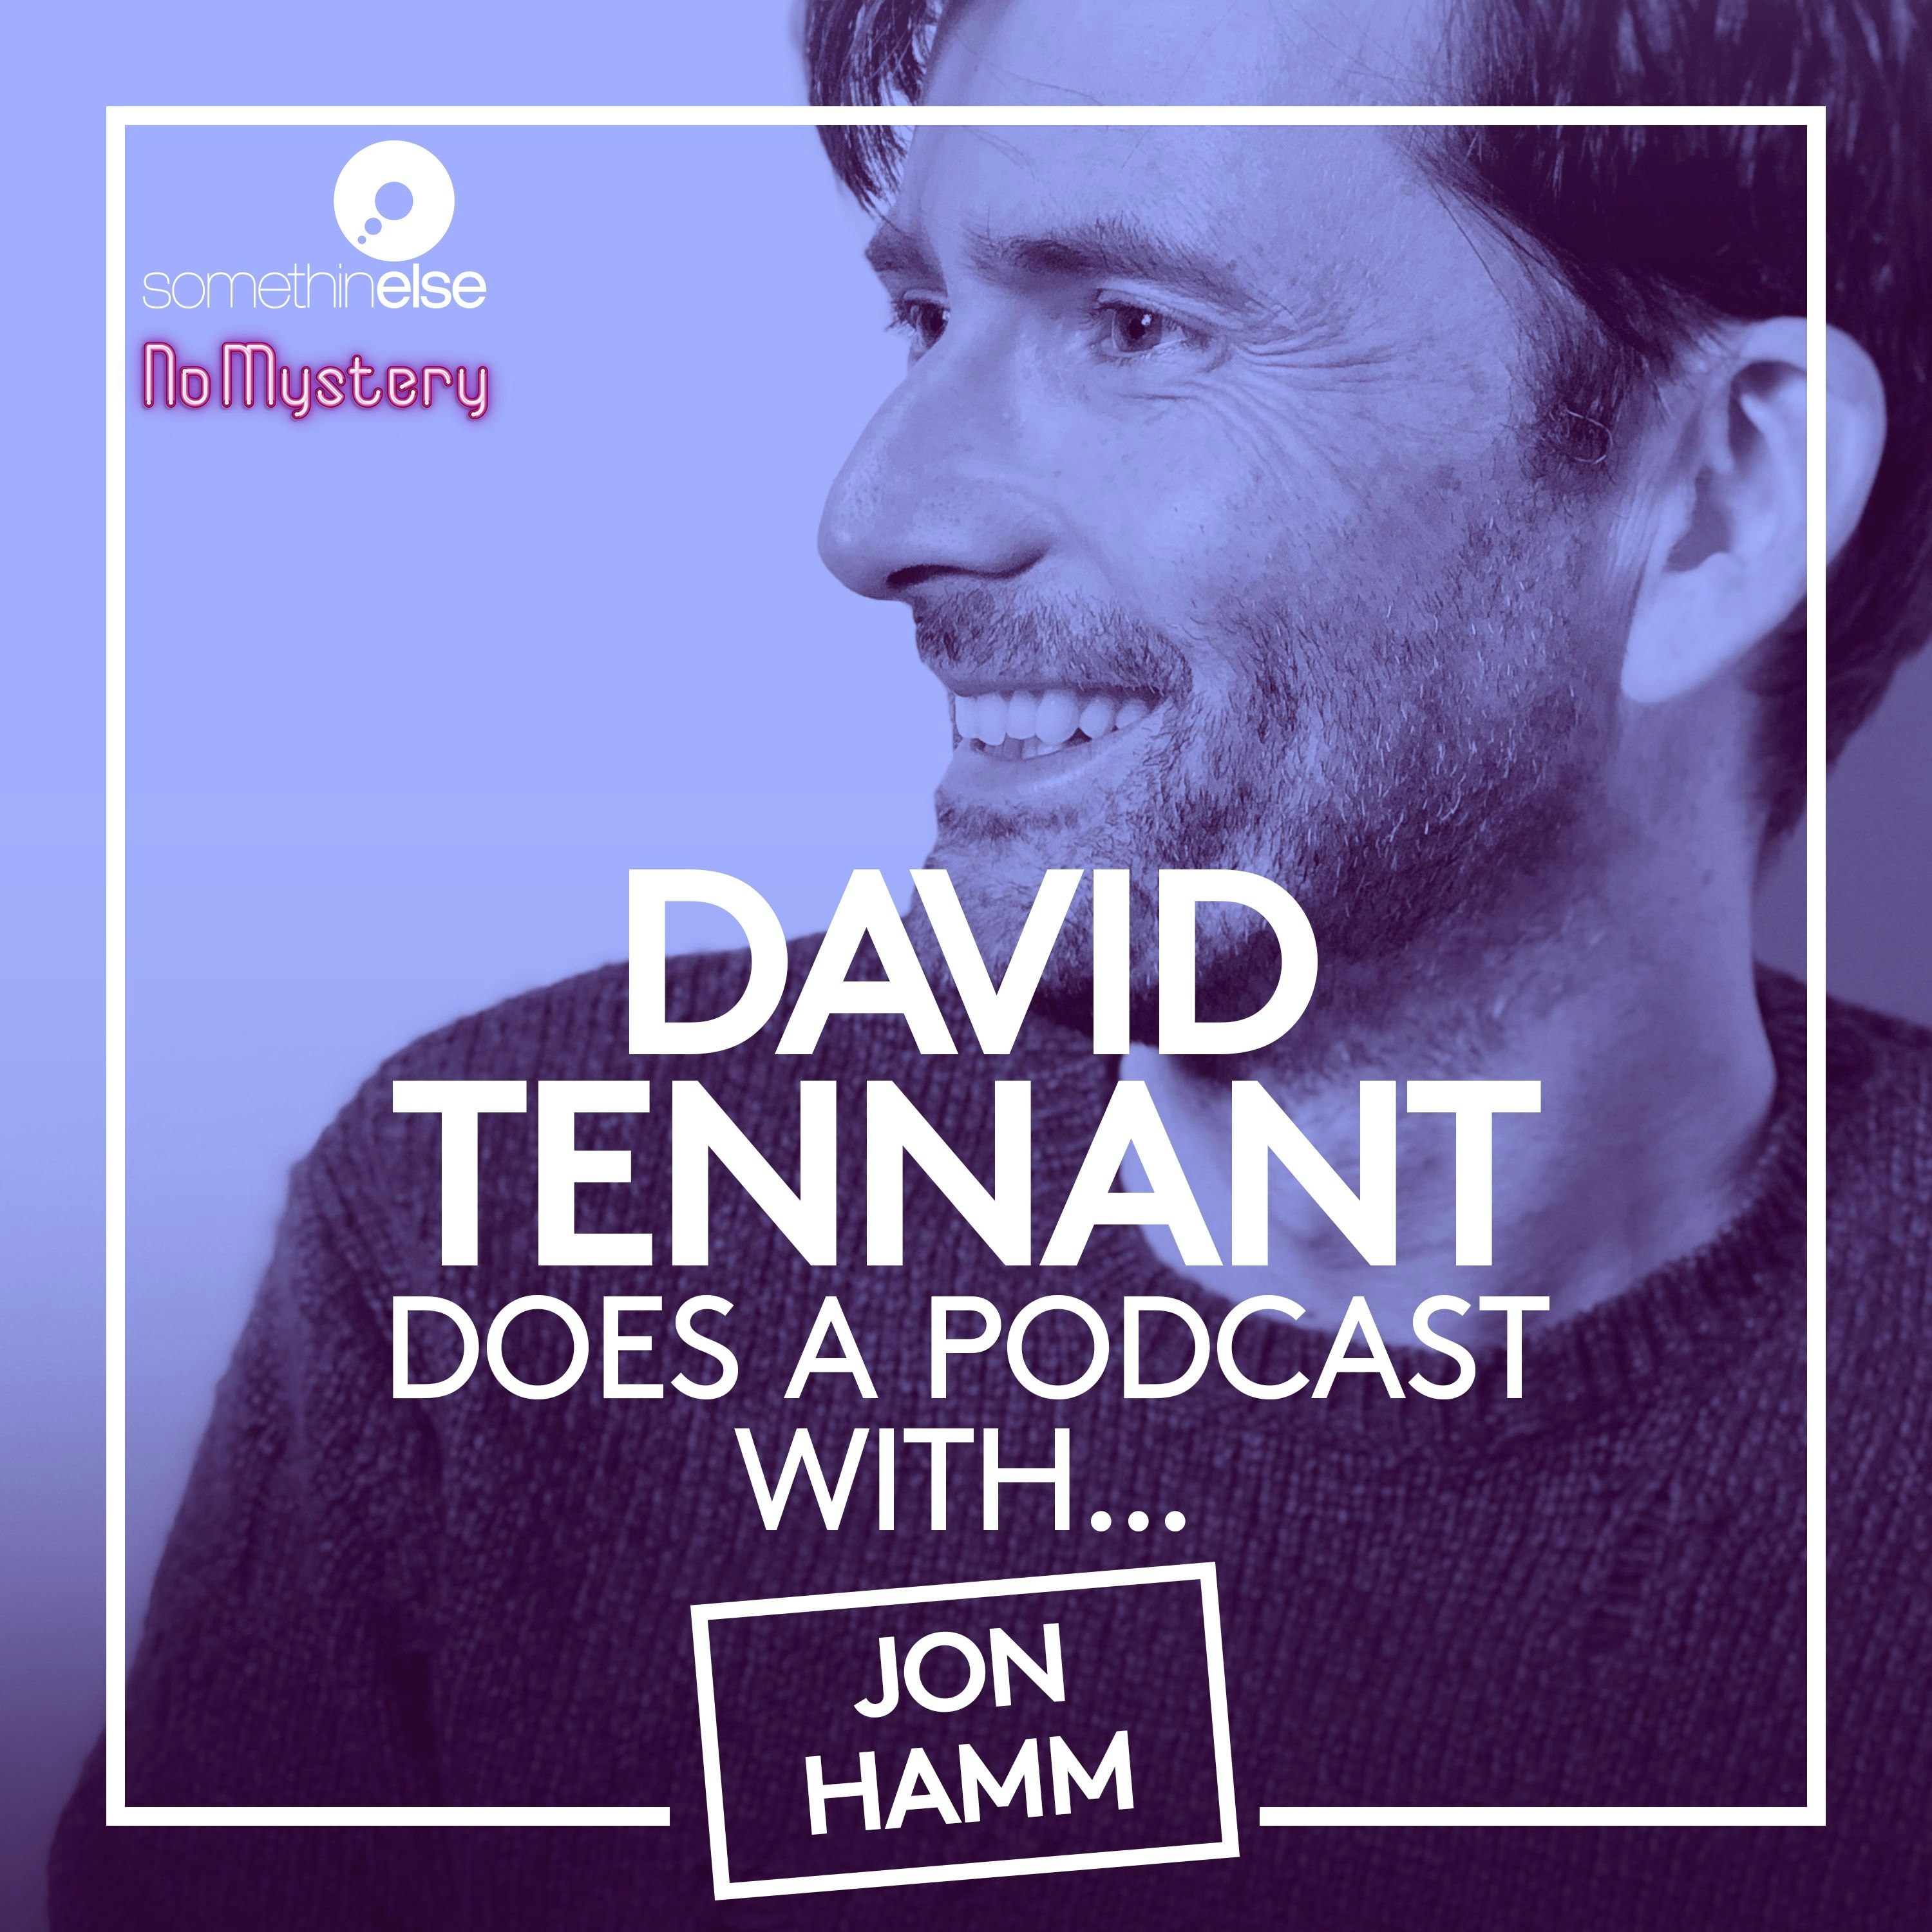 Jon Hamm podcast episode